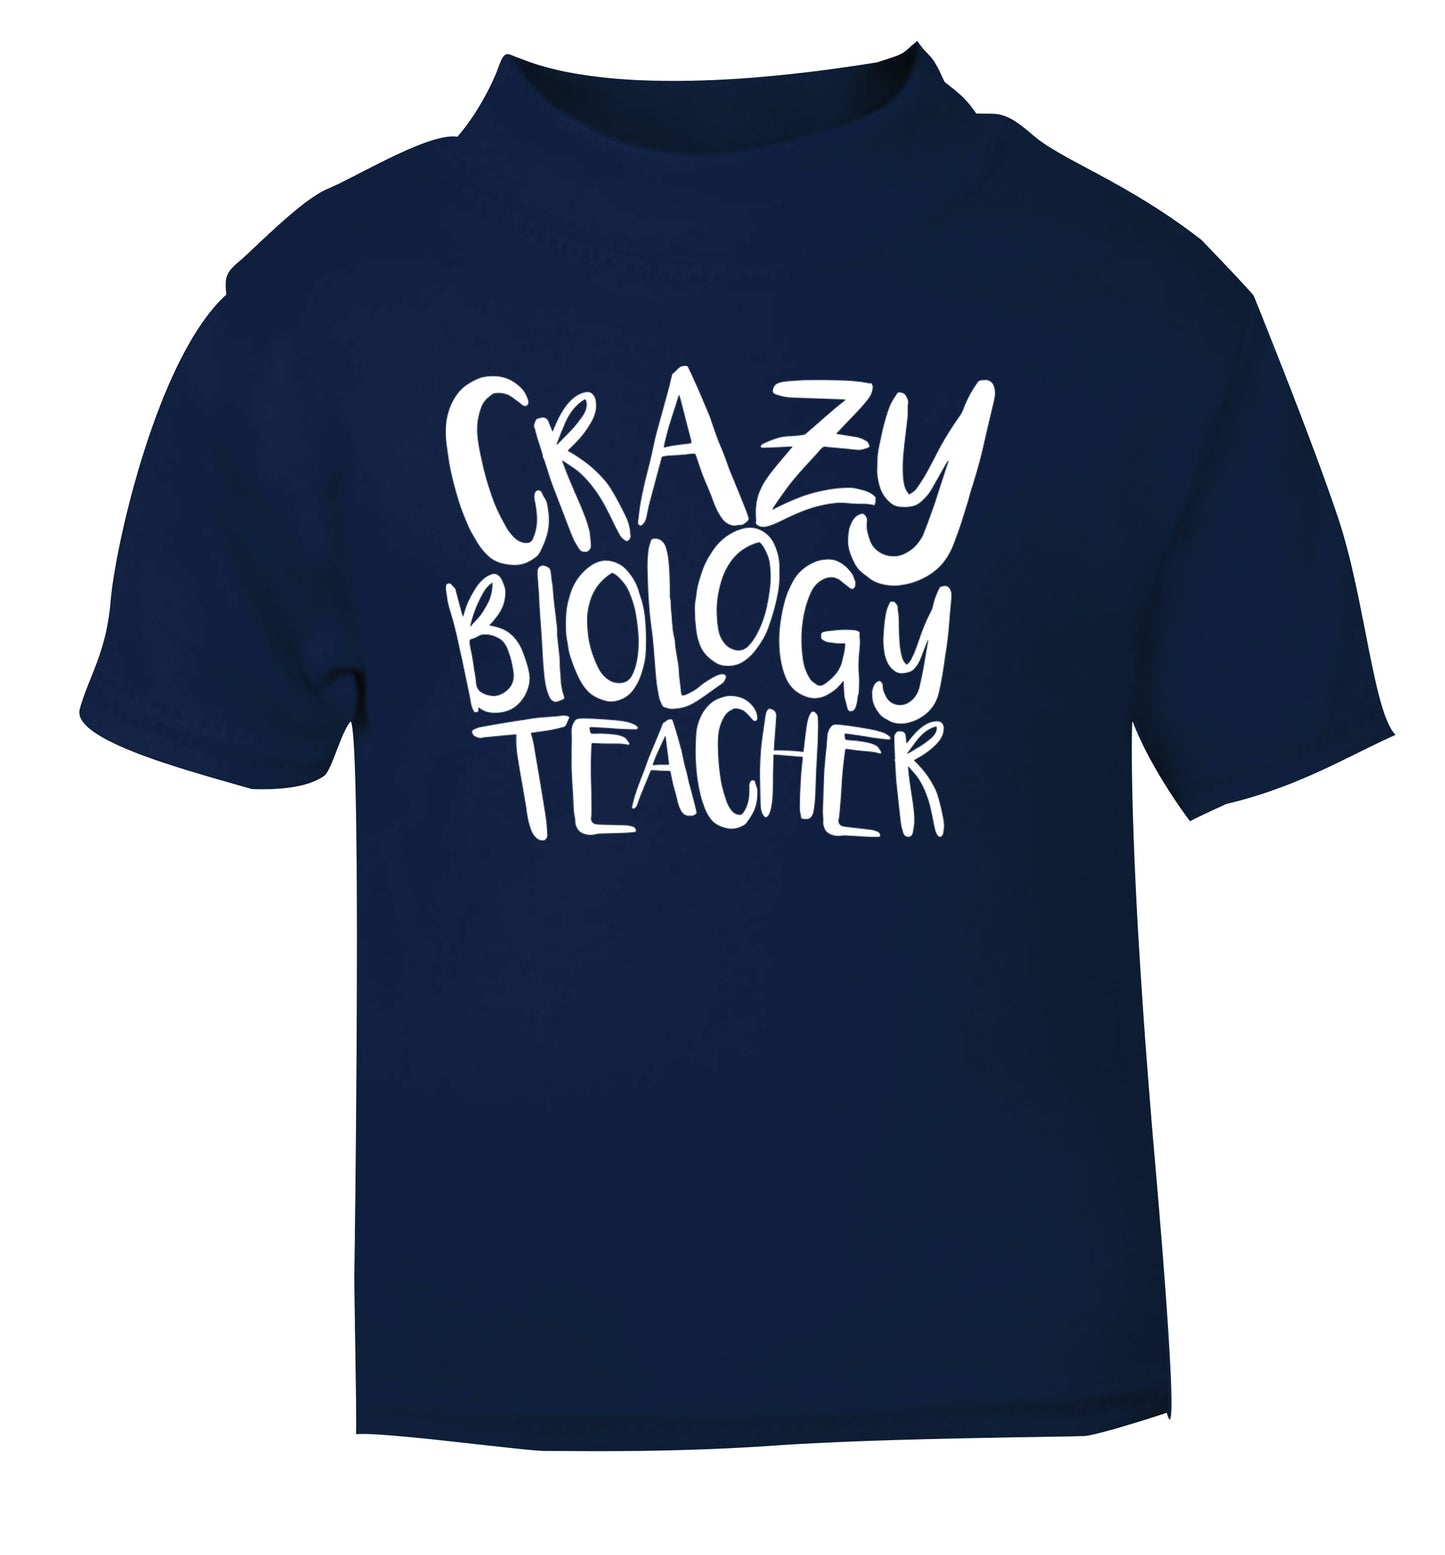 Crazy biology teacher navy Baby Toddler Tshirt 2 Years